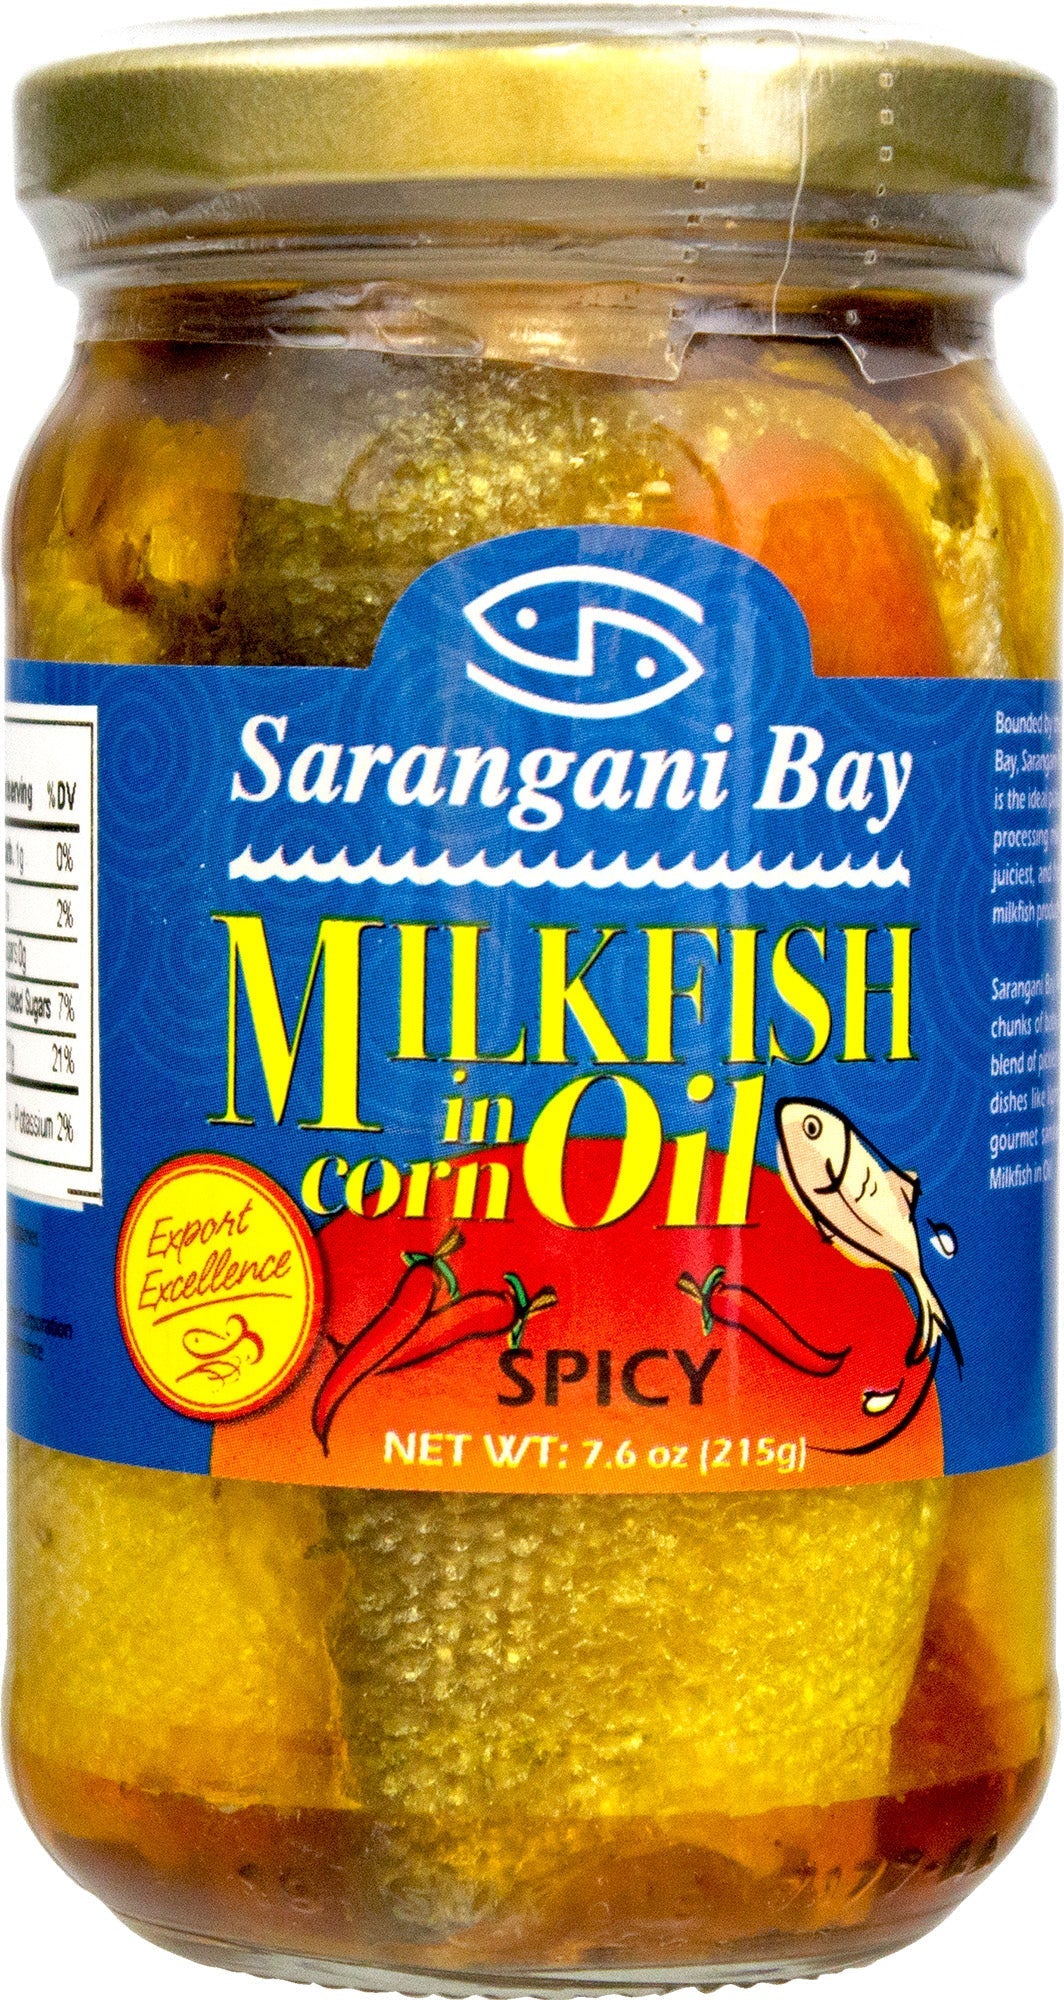 Sarangani Bay Milkfish in Oil - Spicy